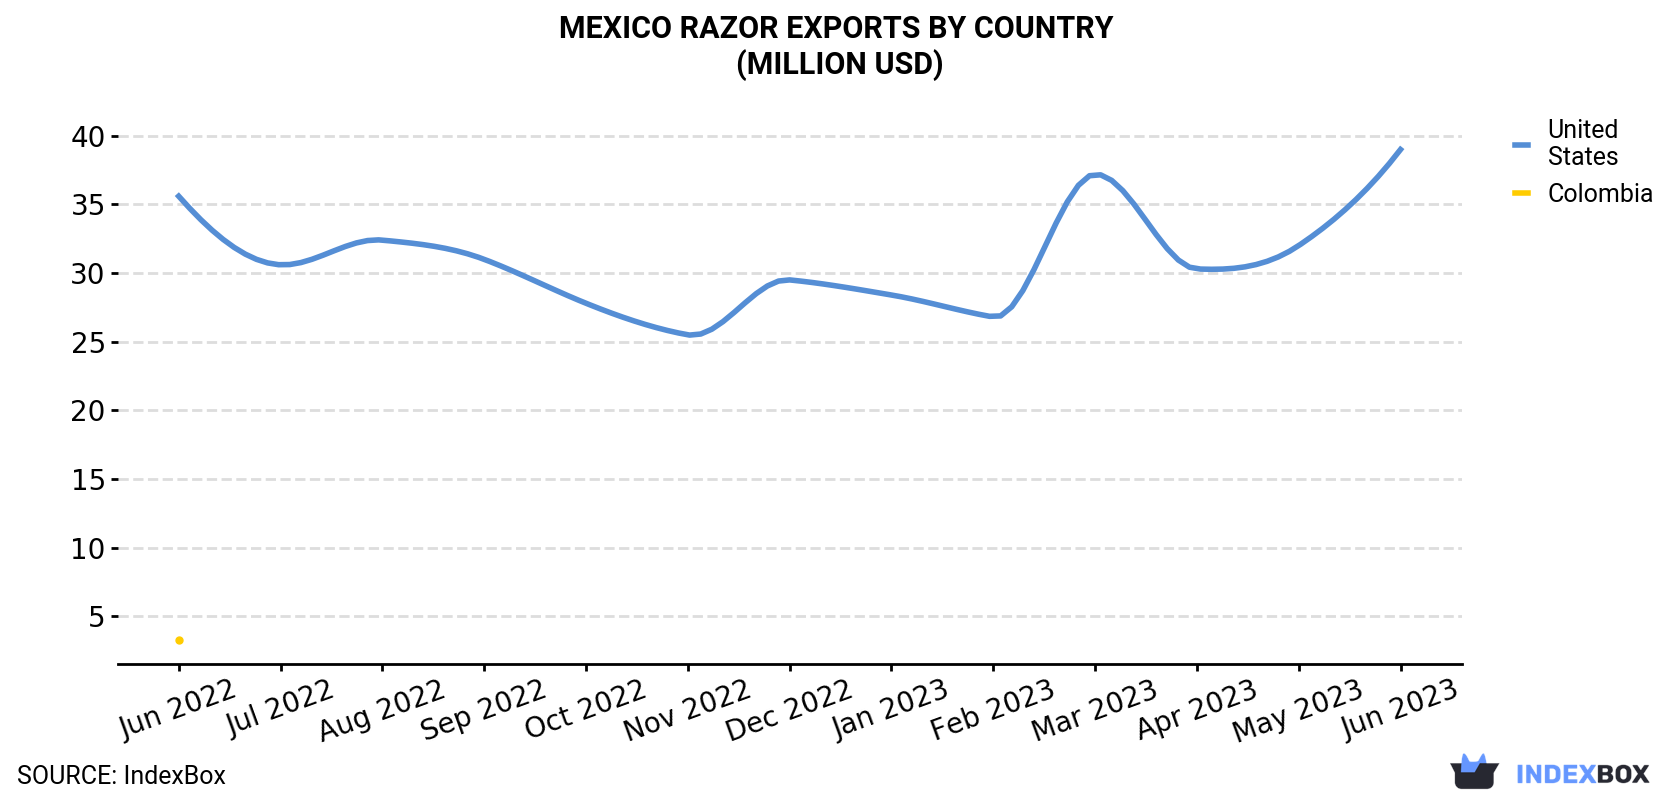 Mexico Razor Exports By Country (Million USD)